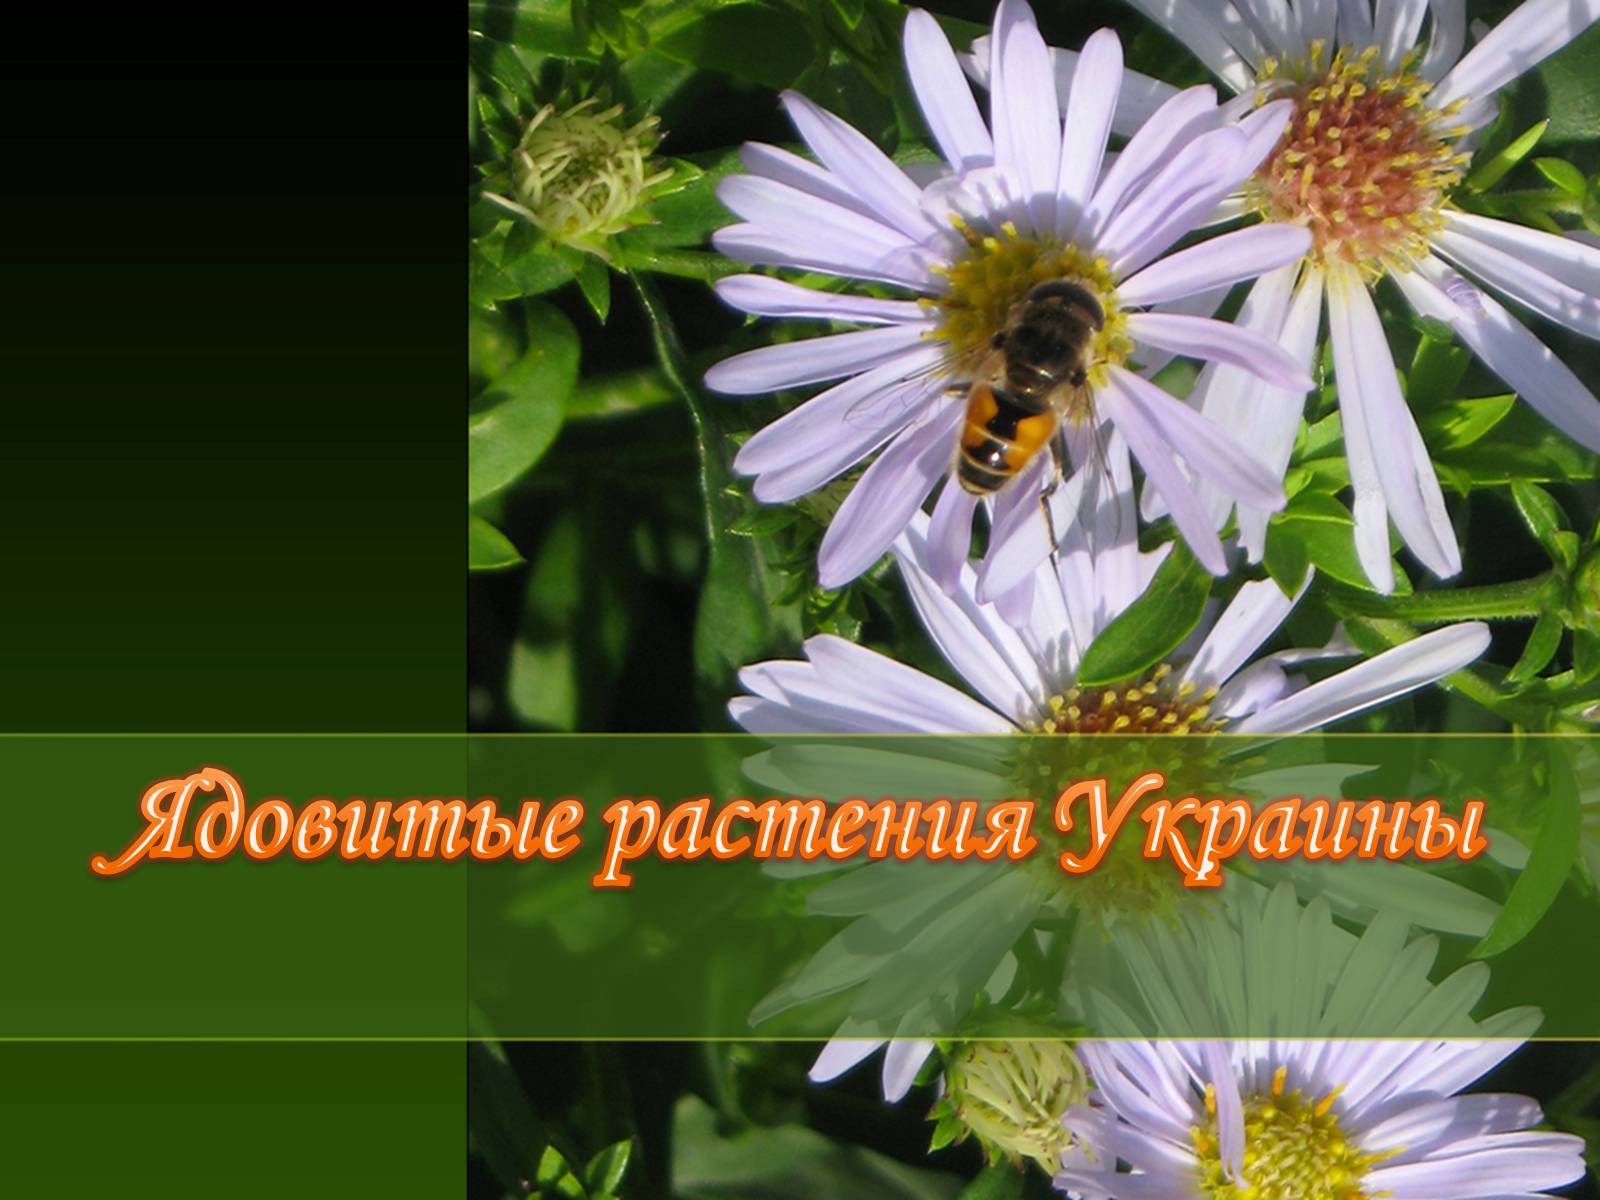 Презентація на тему «Ядовитые растения Украины» - Слайд #1